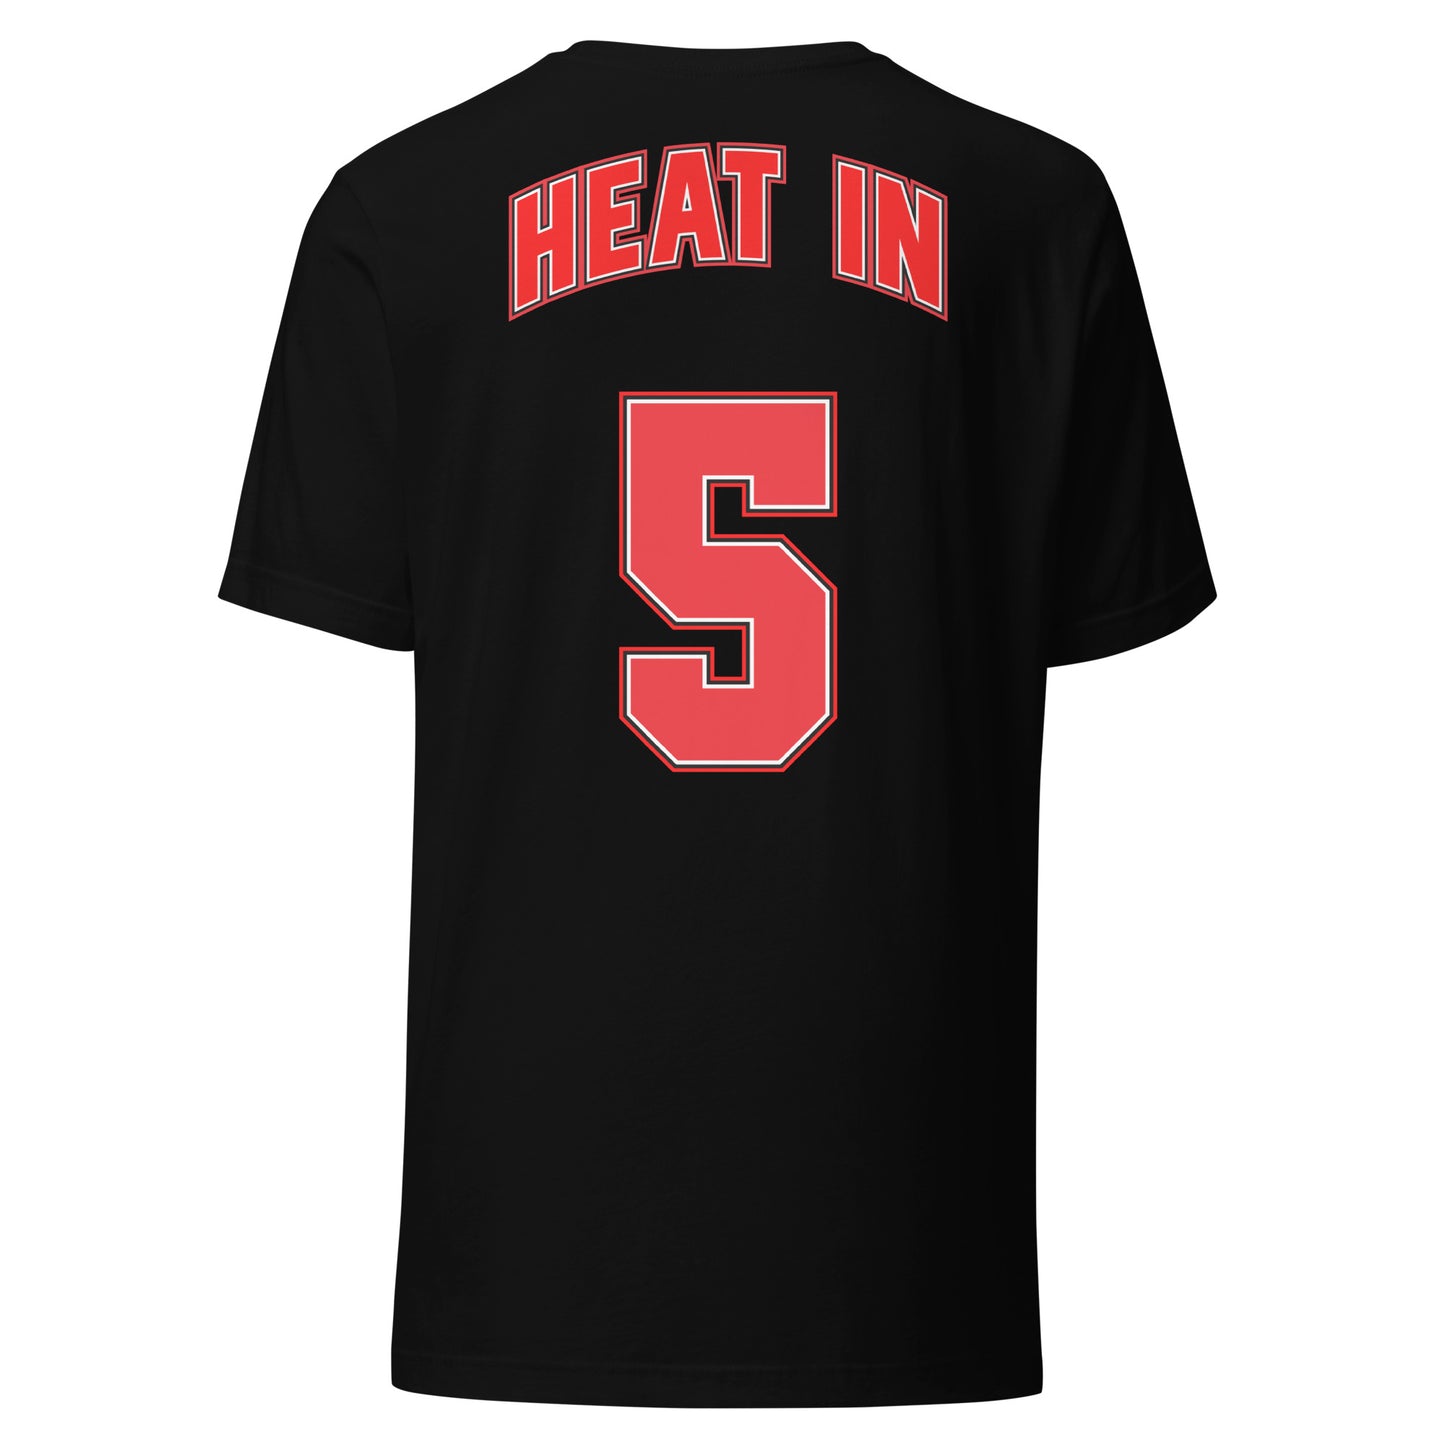 Heat In 5 Shirt